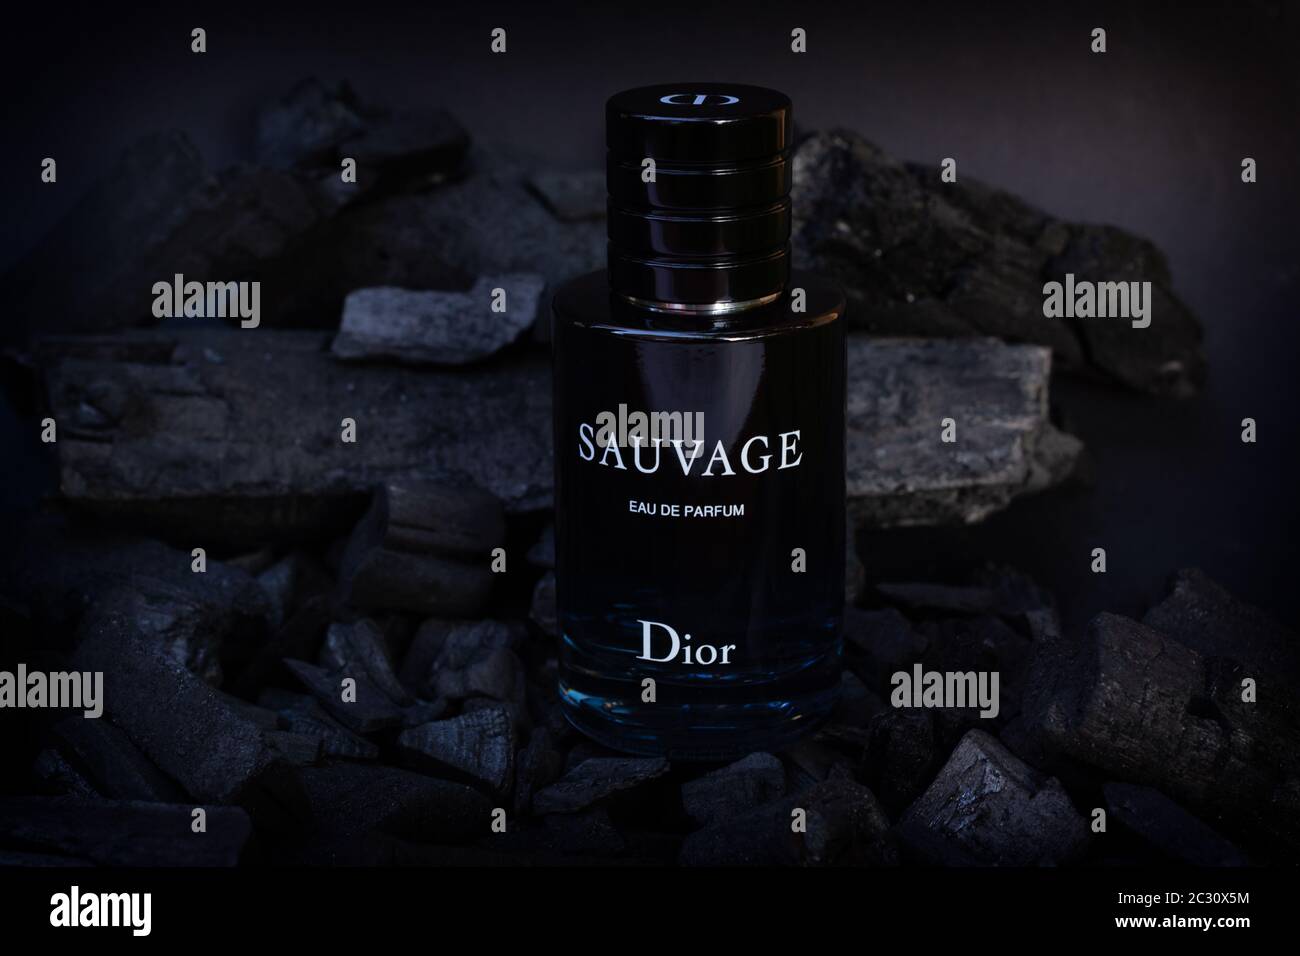 sauvage dior 2018